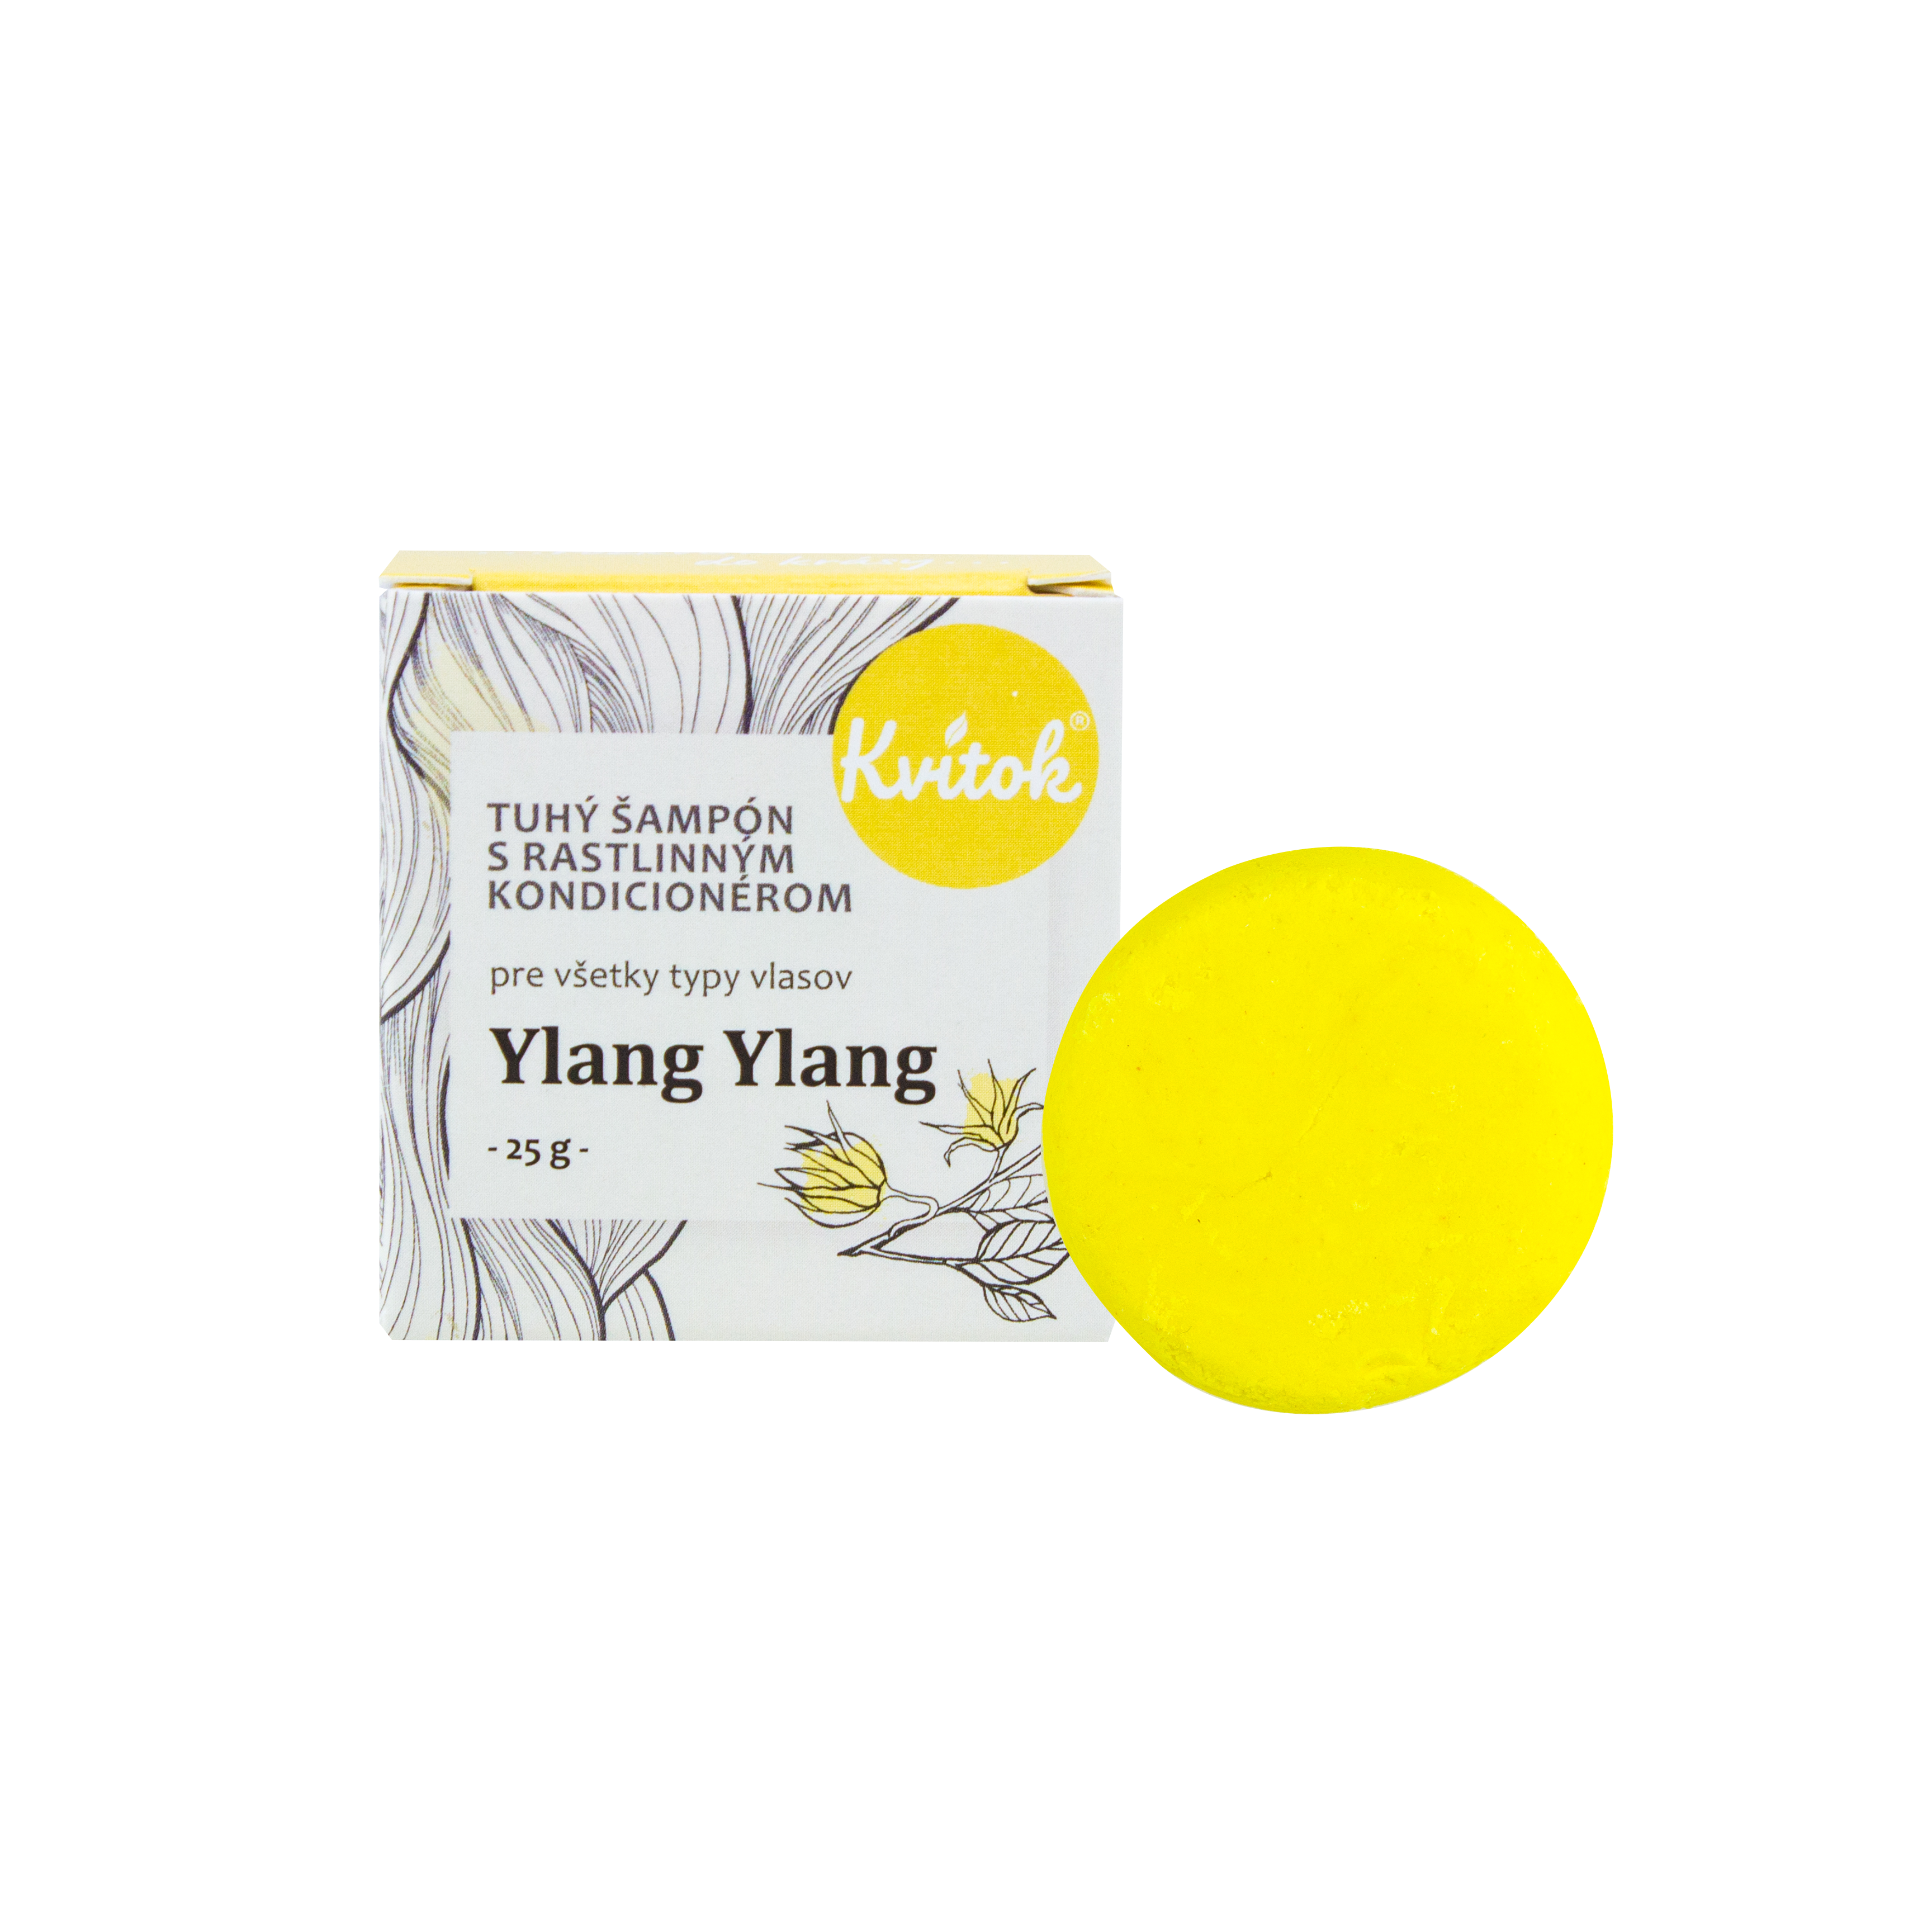 Tuhý šampón pre Svetlé vlasy Ylang Ylang 25g Kvitok